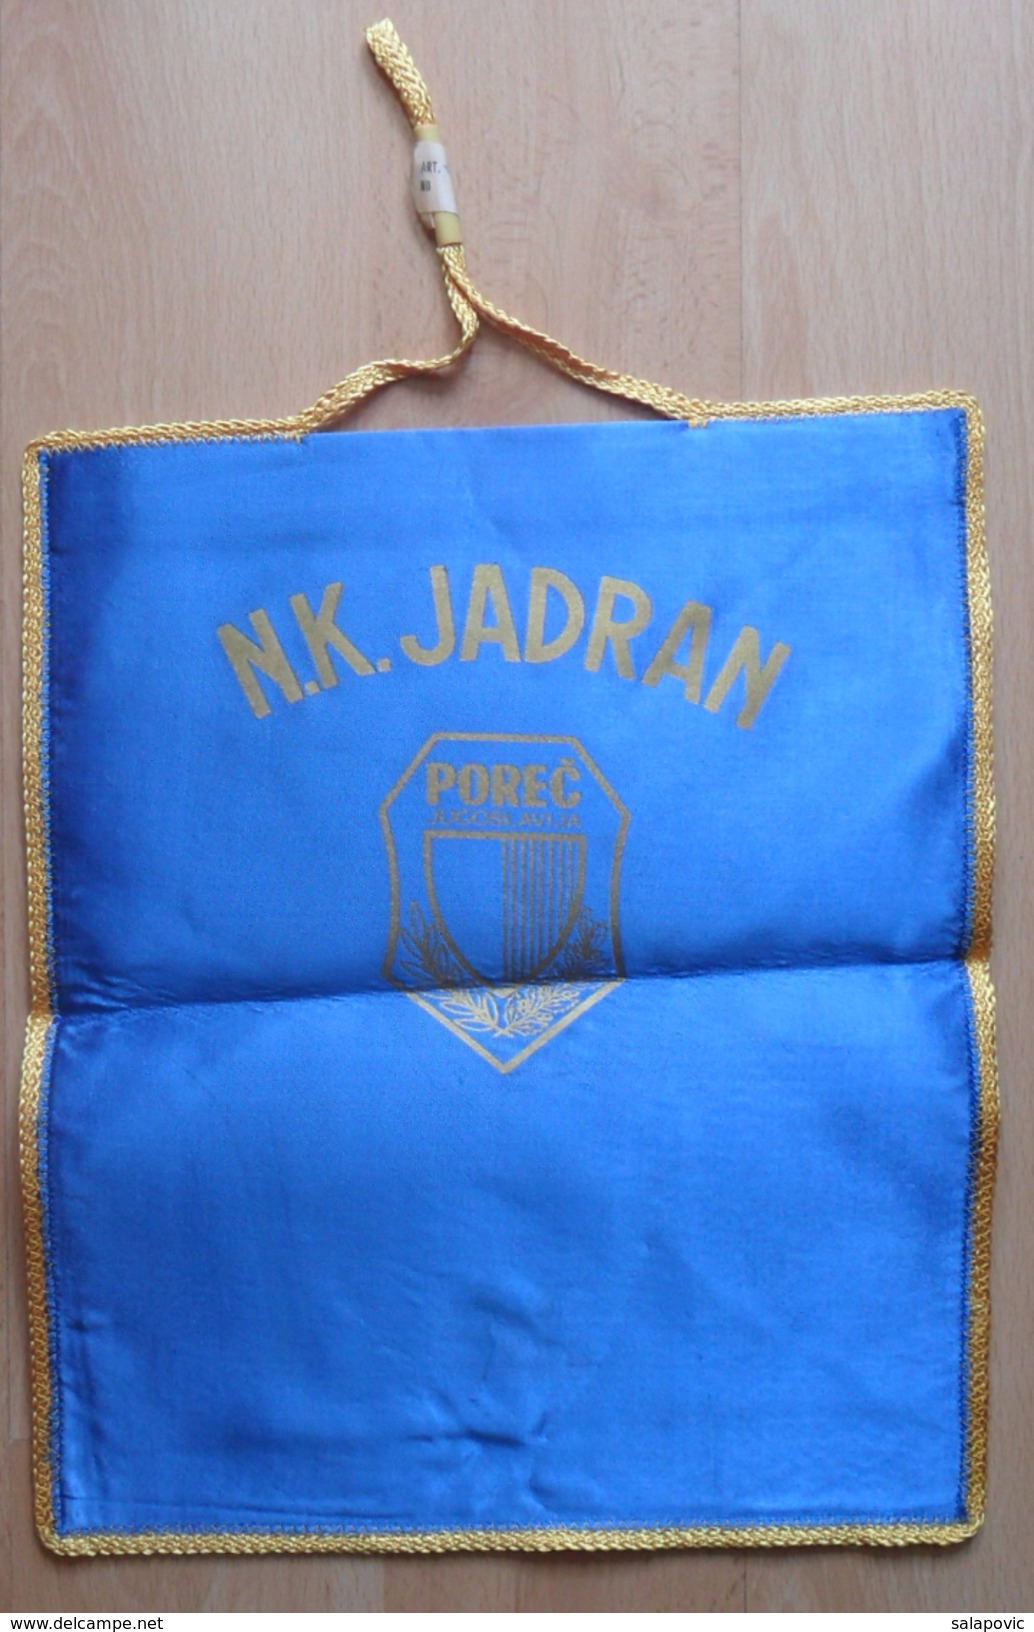 NK JADRAN, POREC, Croatia FOOTBALL CLUB, SOCCER / FUTBOL / CALCIO,  OLD PENNANT, SPORTS FLAG - Apparel, Souvenirs & Other